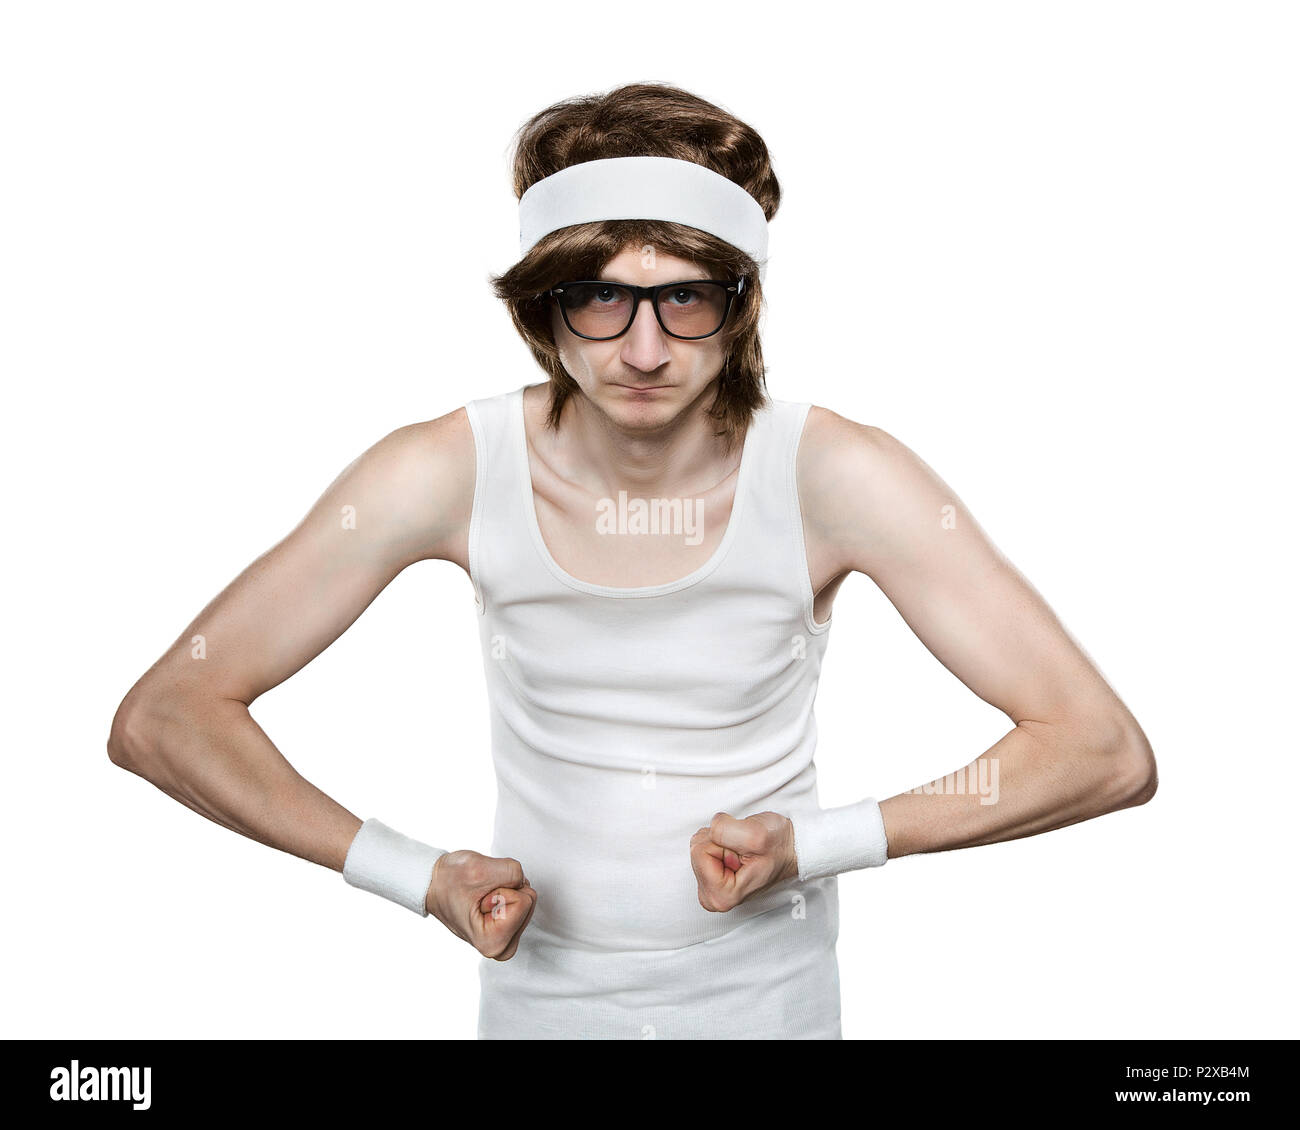 Funny skinny nerd flexing muscle Stock Photo - Alamy